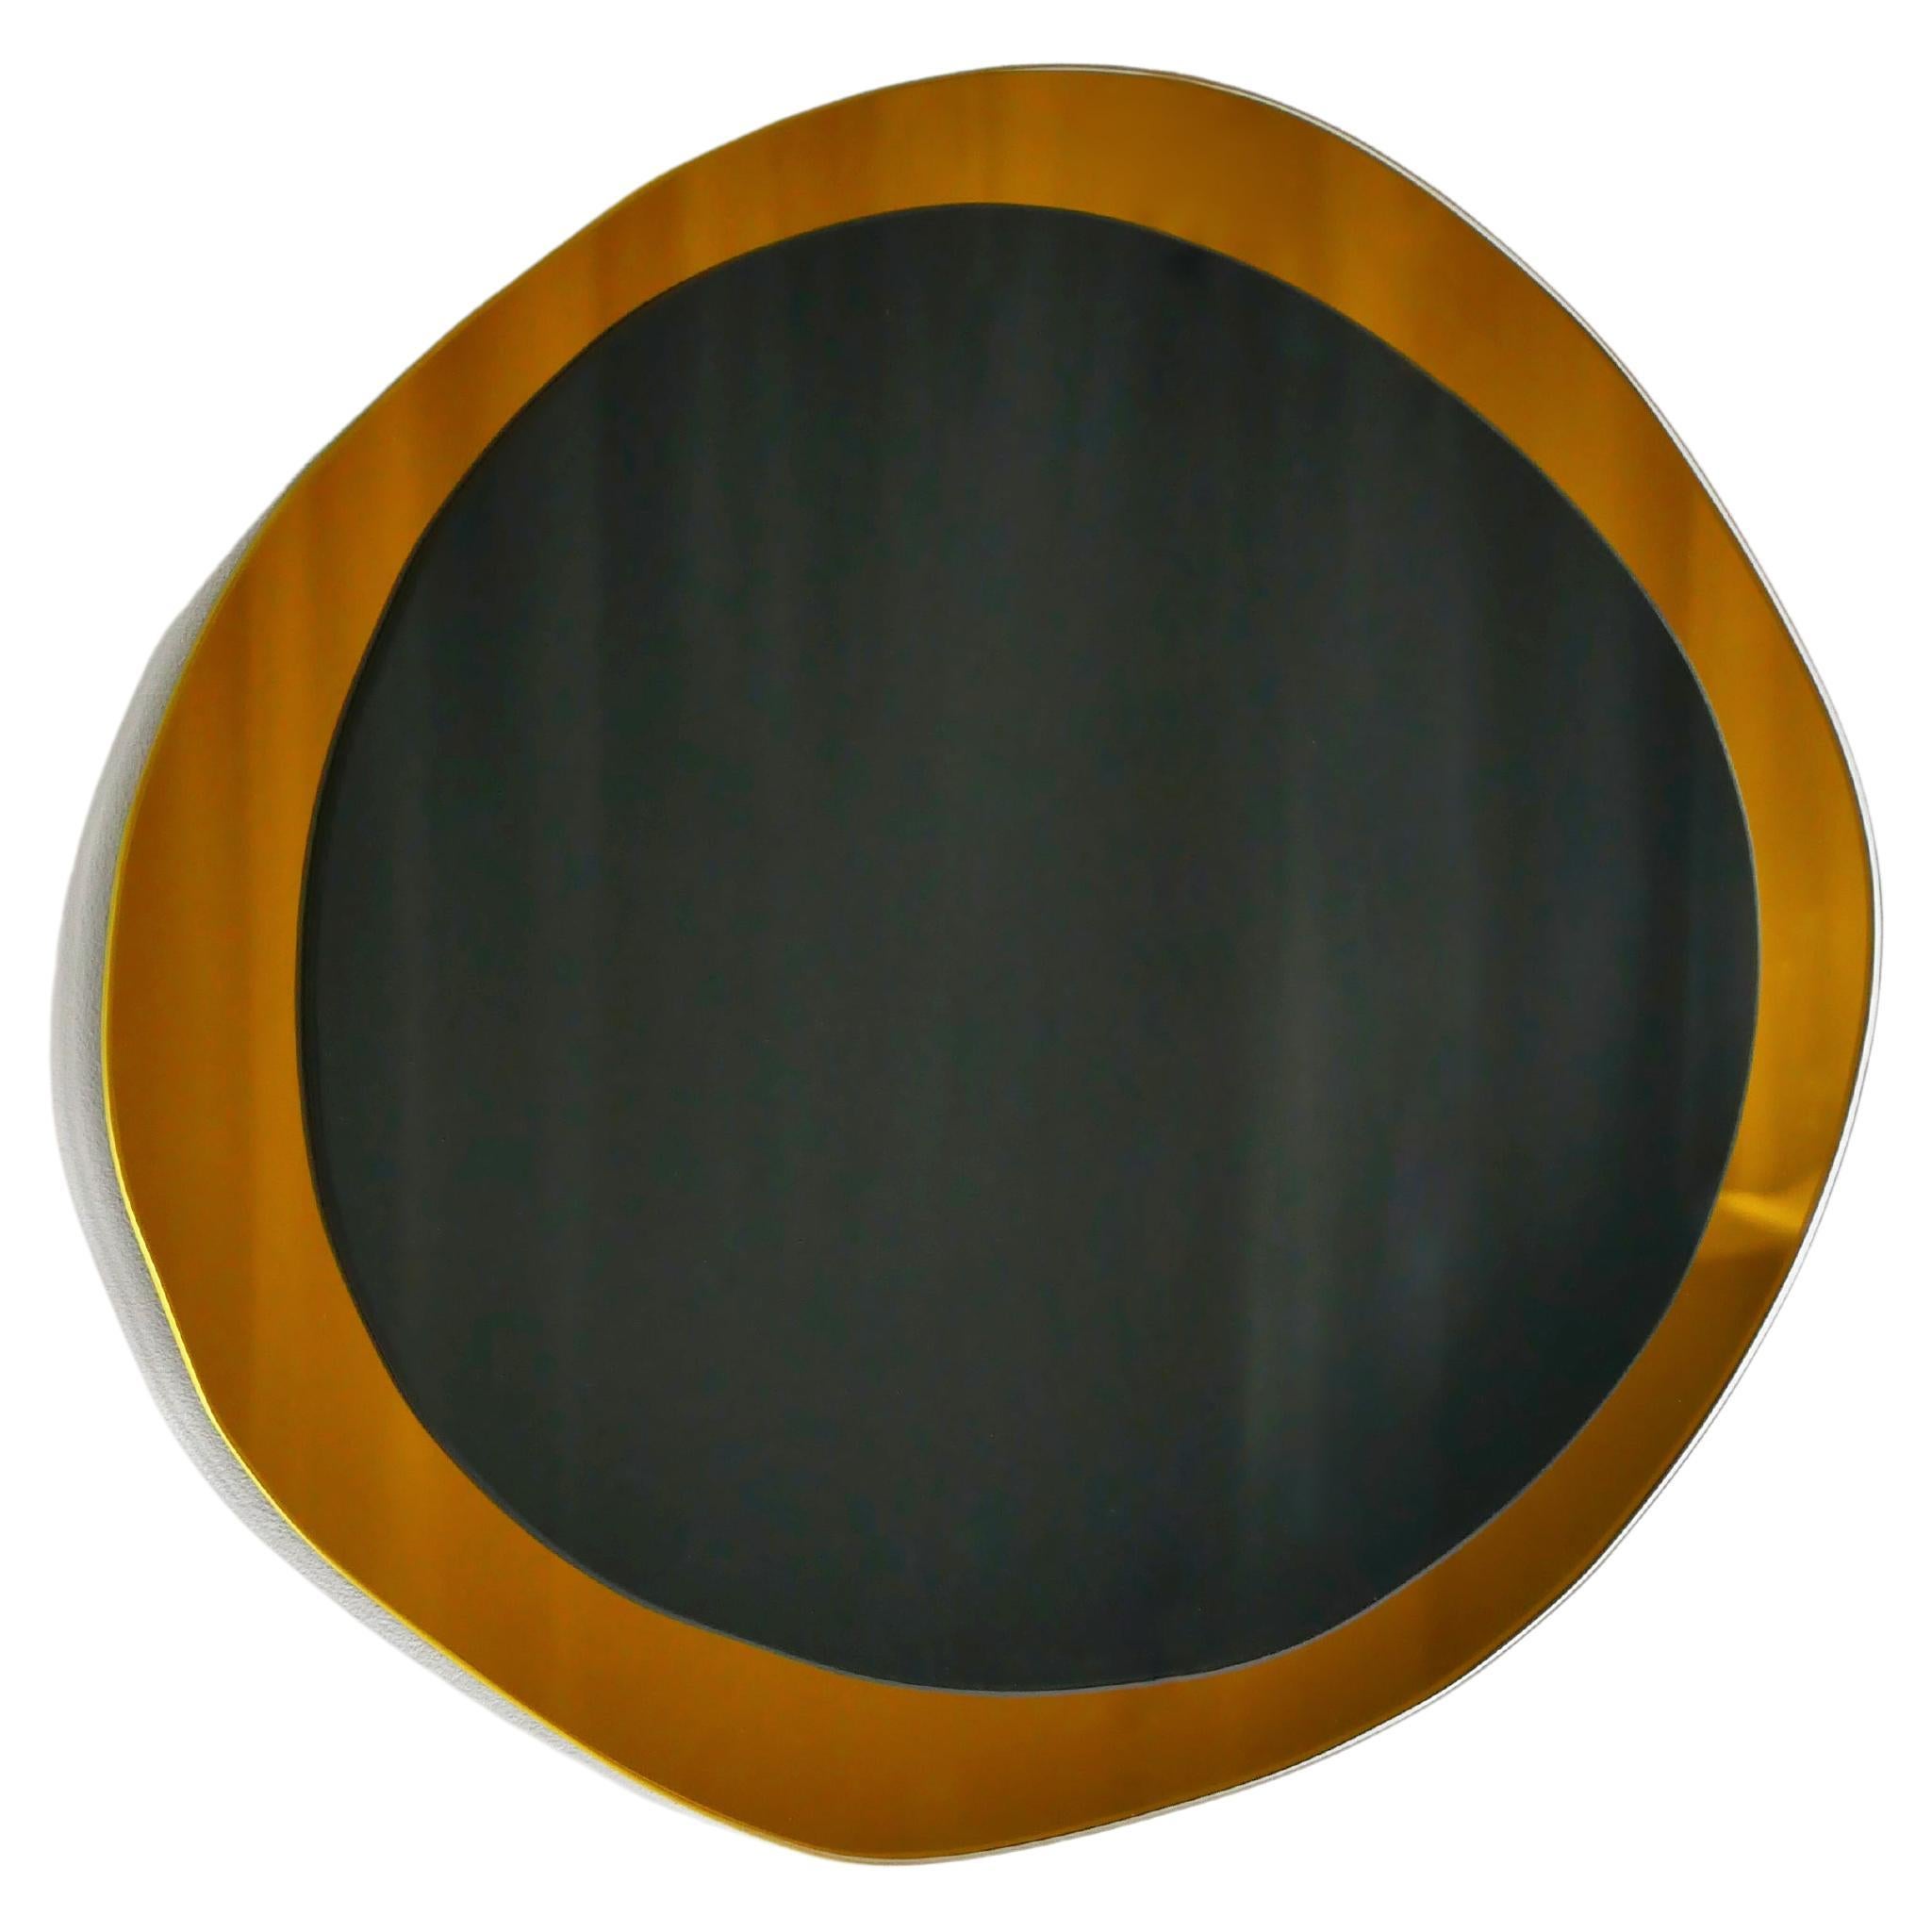 Dark Eclipse large hand-sculpted mirror, Laurene Guarneri
Limited edition.
Handmade.
Materials: gold colored mirror, dark colored mirror.
Dimensions: 100 x 100 cm

Laurène Guarneri is a designer based in Paris.
Graduated in master's degree